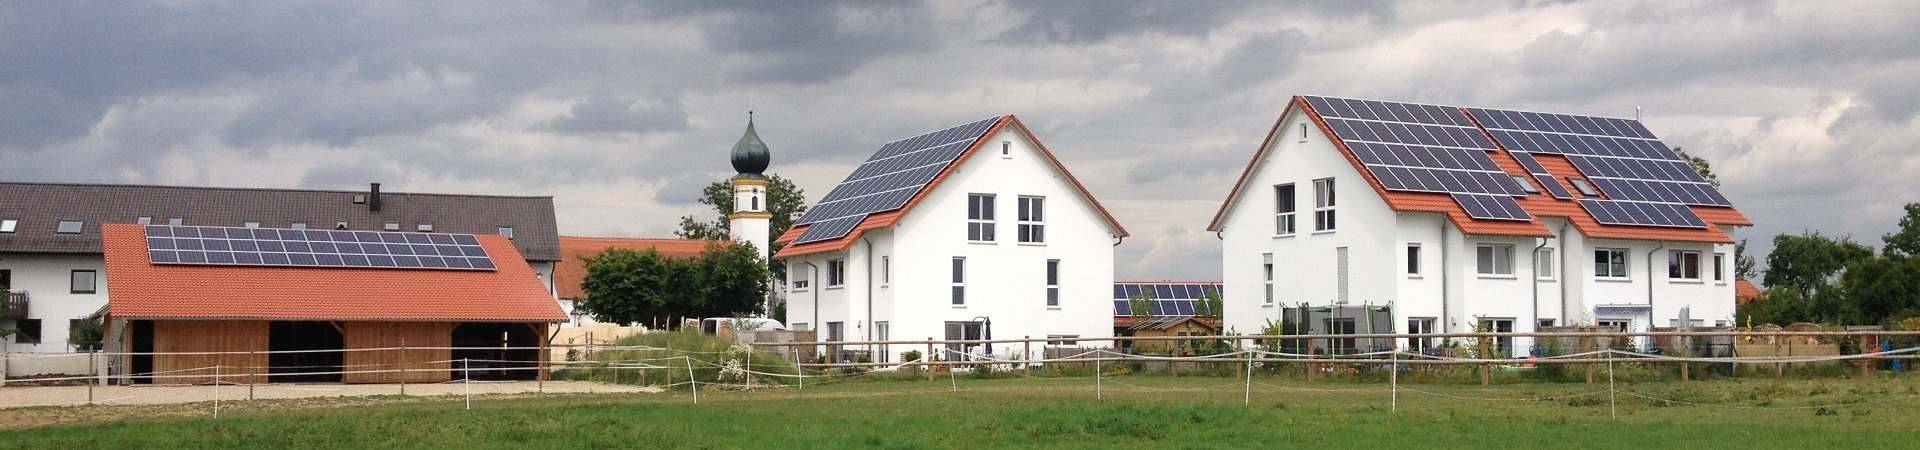 Photovoltaik Burgenland